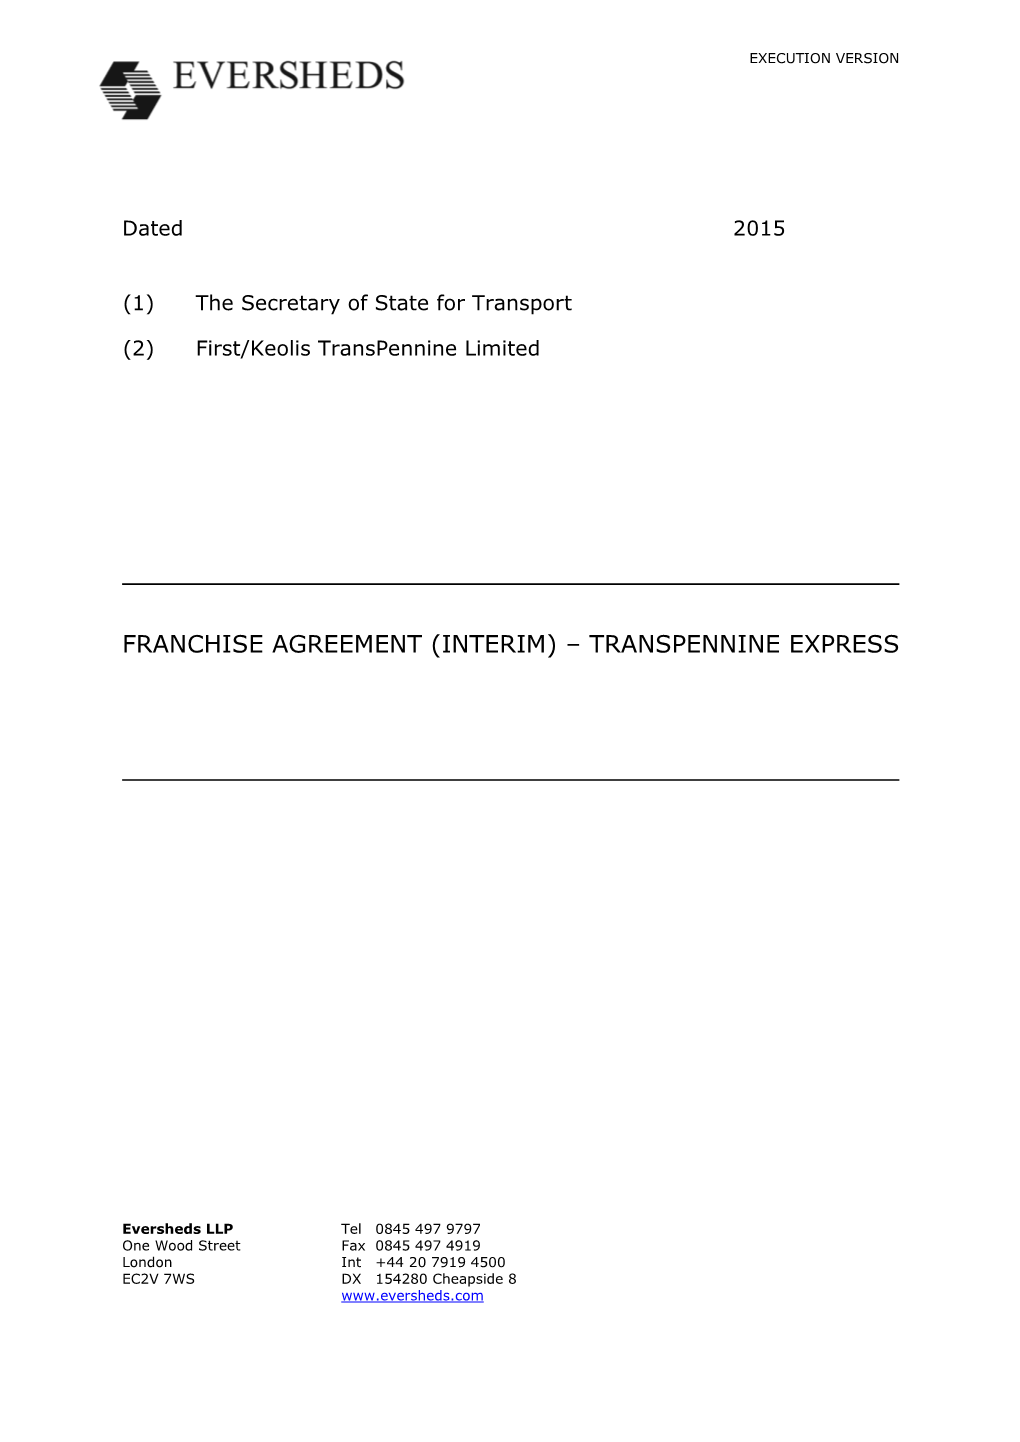 Transpennine Express Franchise Agreement